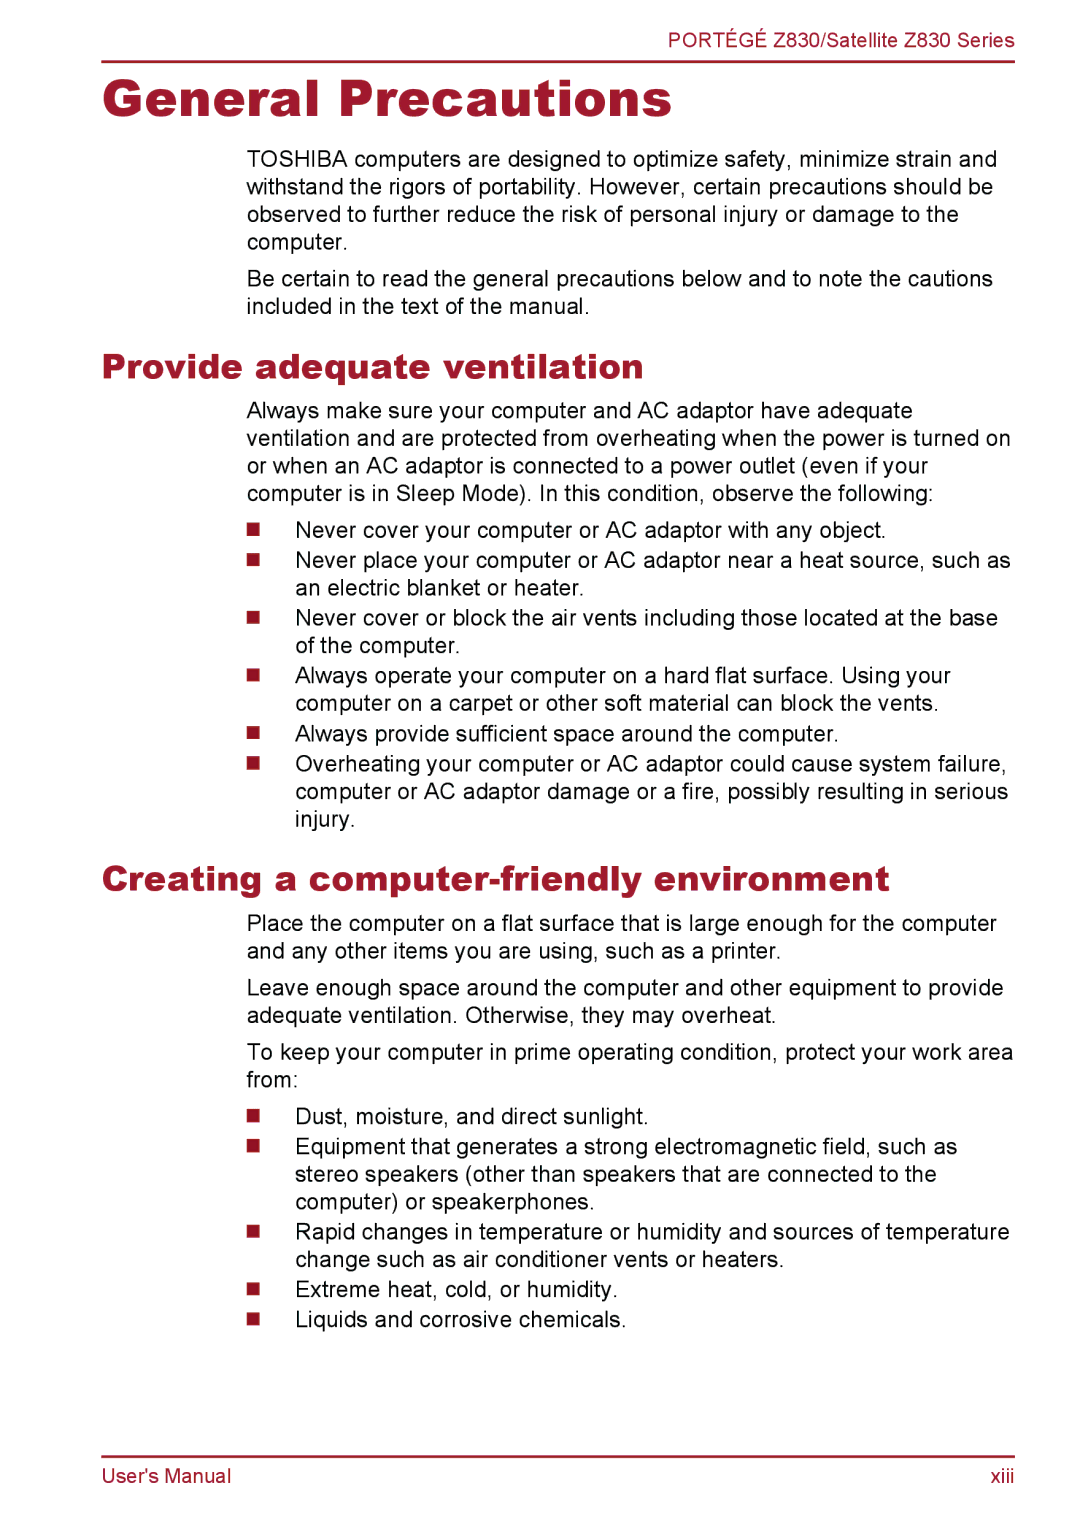 Toshiba Z830 user manual General Precautions, Provide adequate ventilation, Creating a computer-friendly environment 